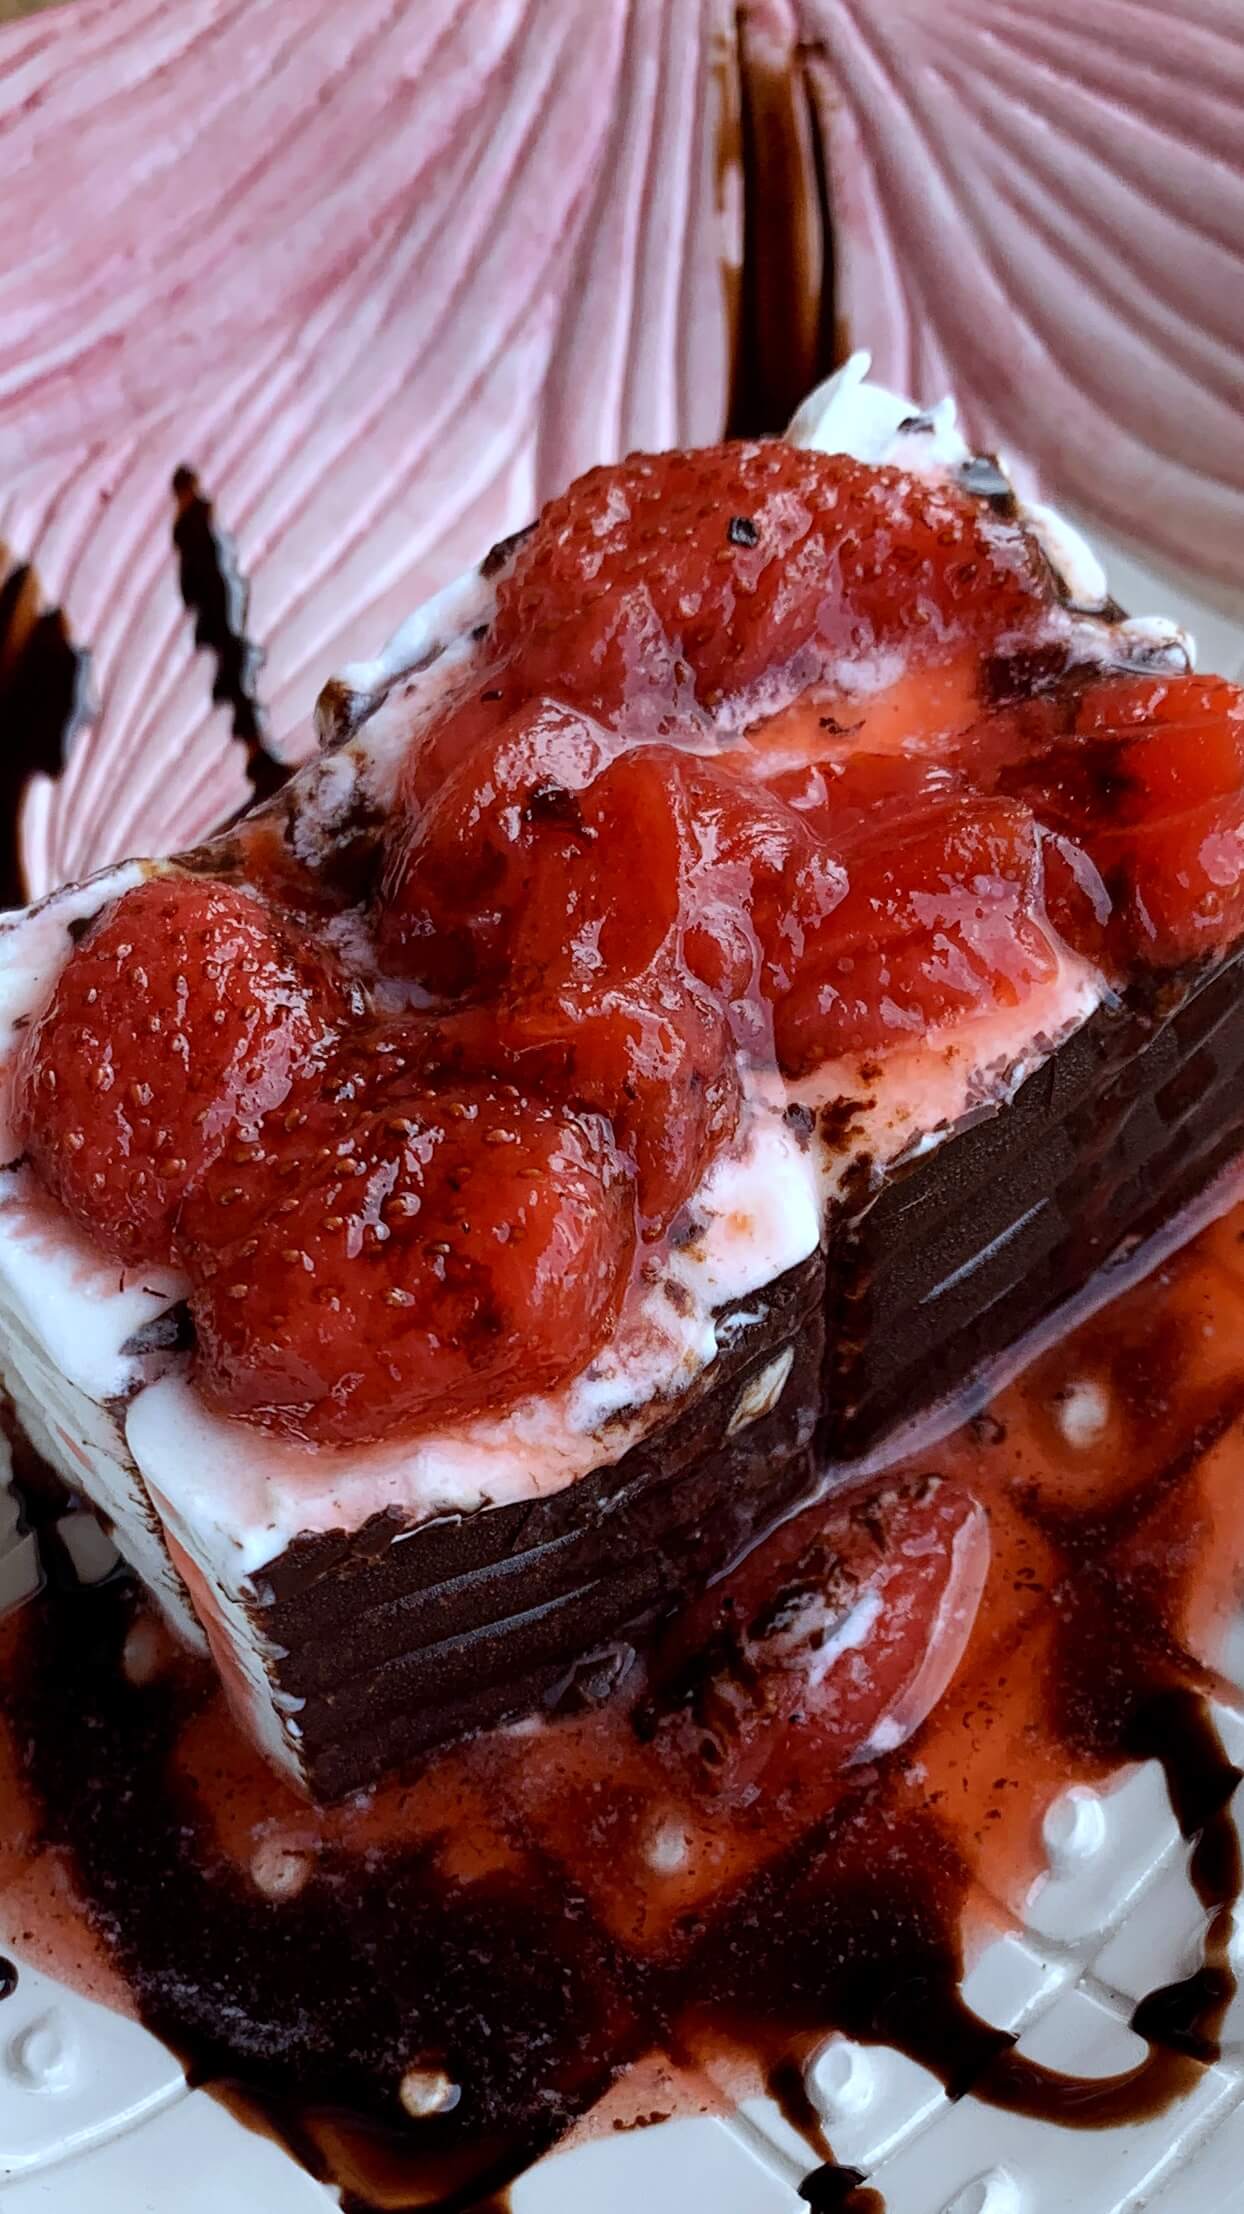 Ice cream cake with hot strawberries sauce